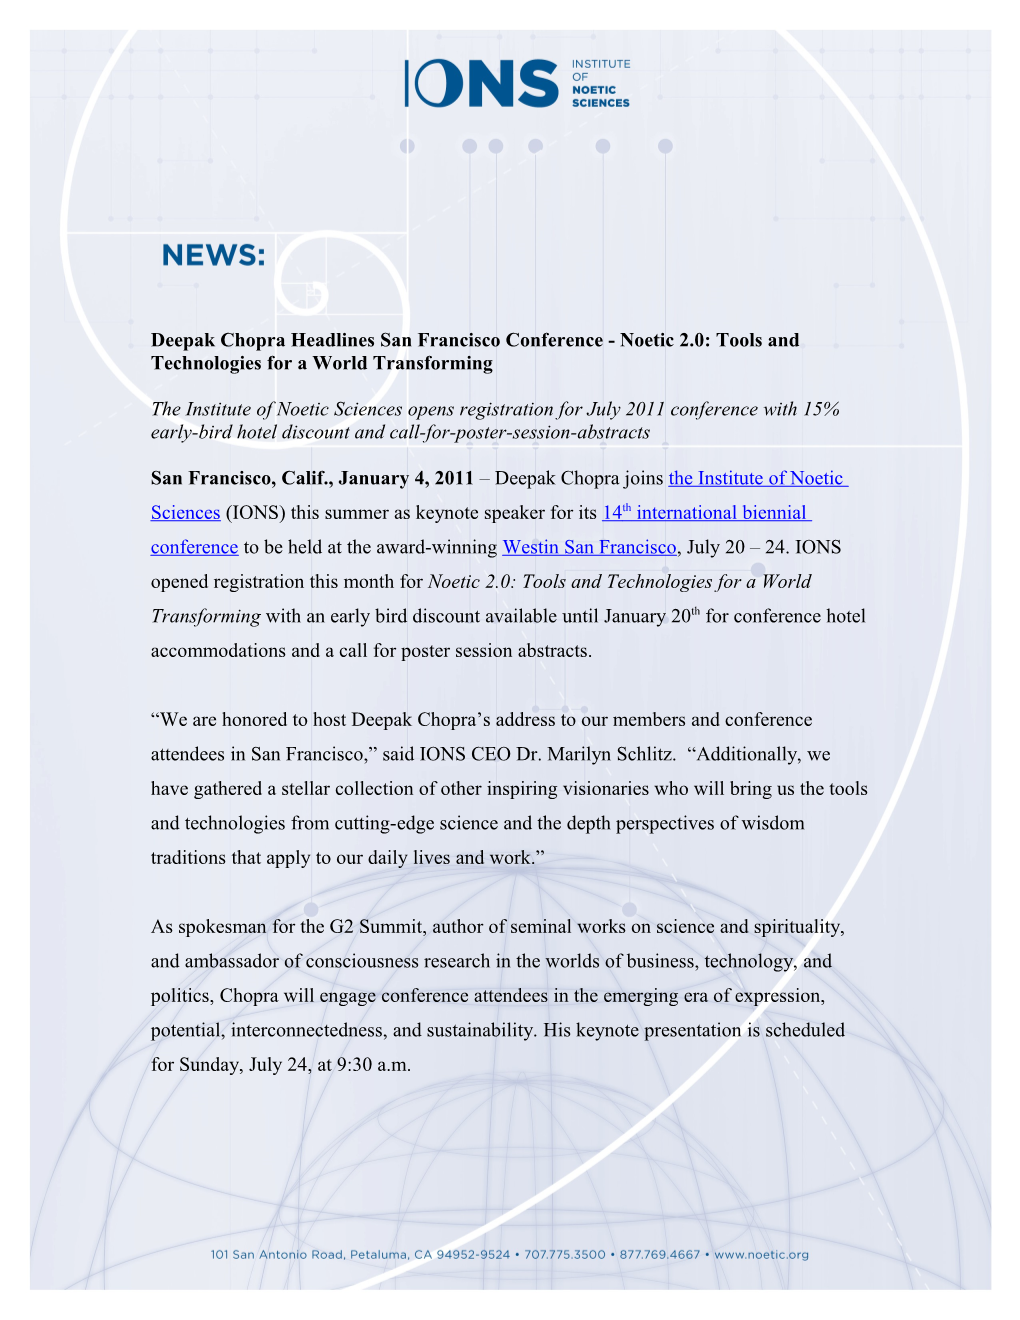 Deepak Chopra Headlines San Francisco Conference - Noetic 2.0: Tools and Technologies